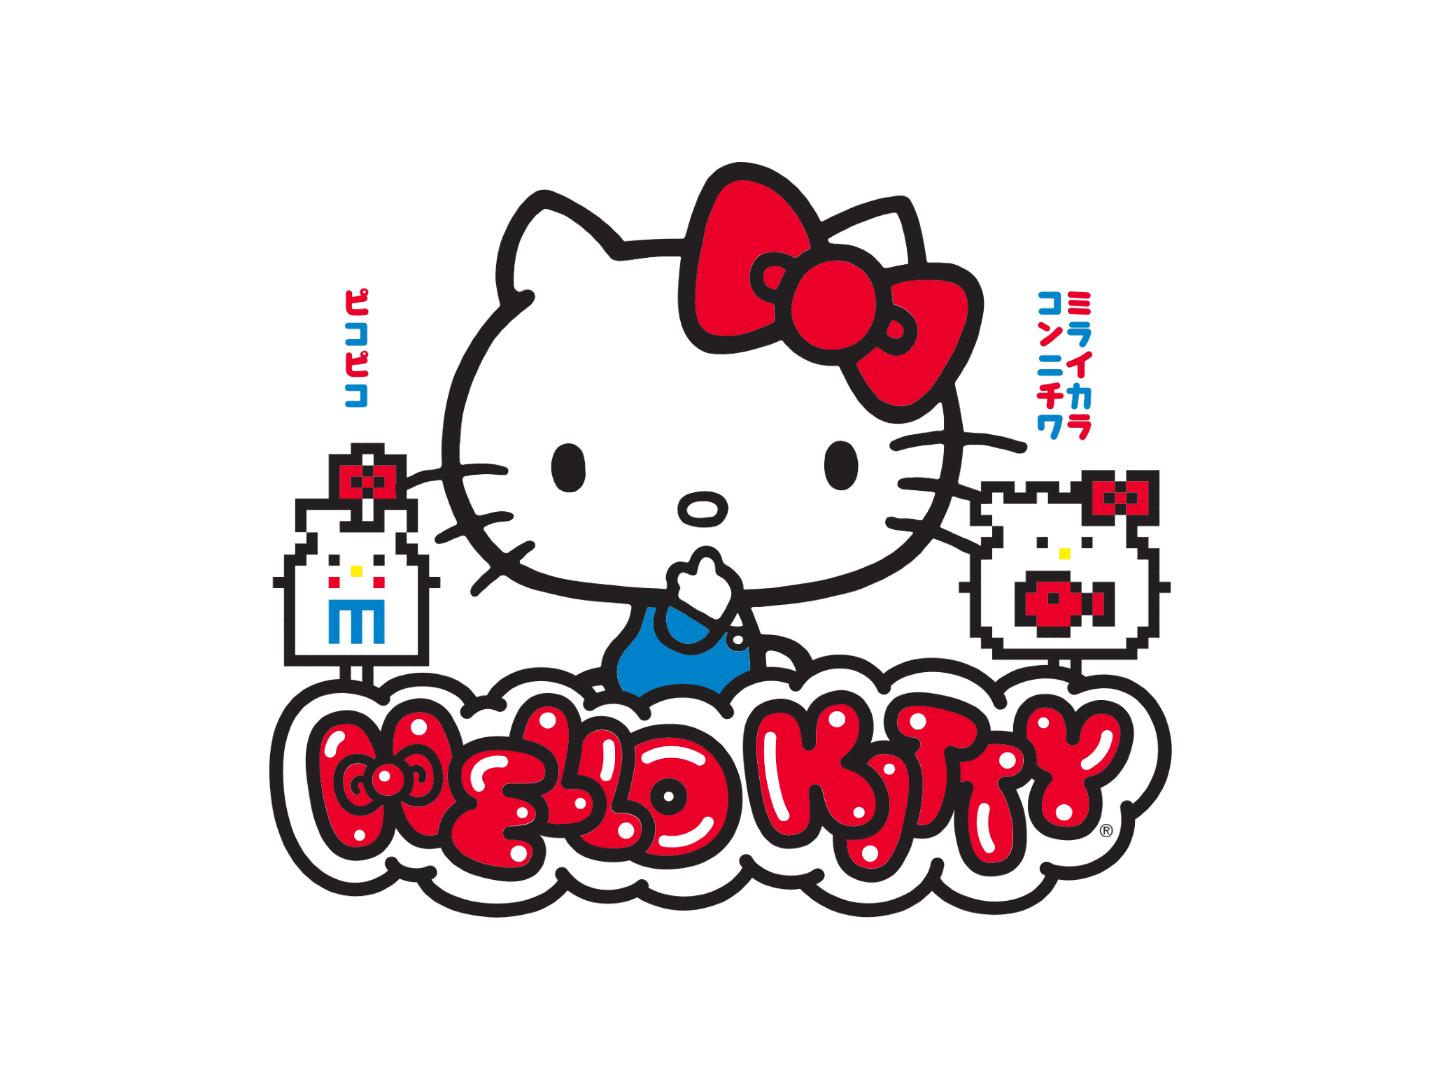 Hello Kitty 45th Anniversary